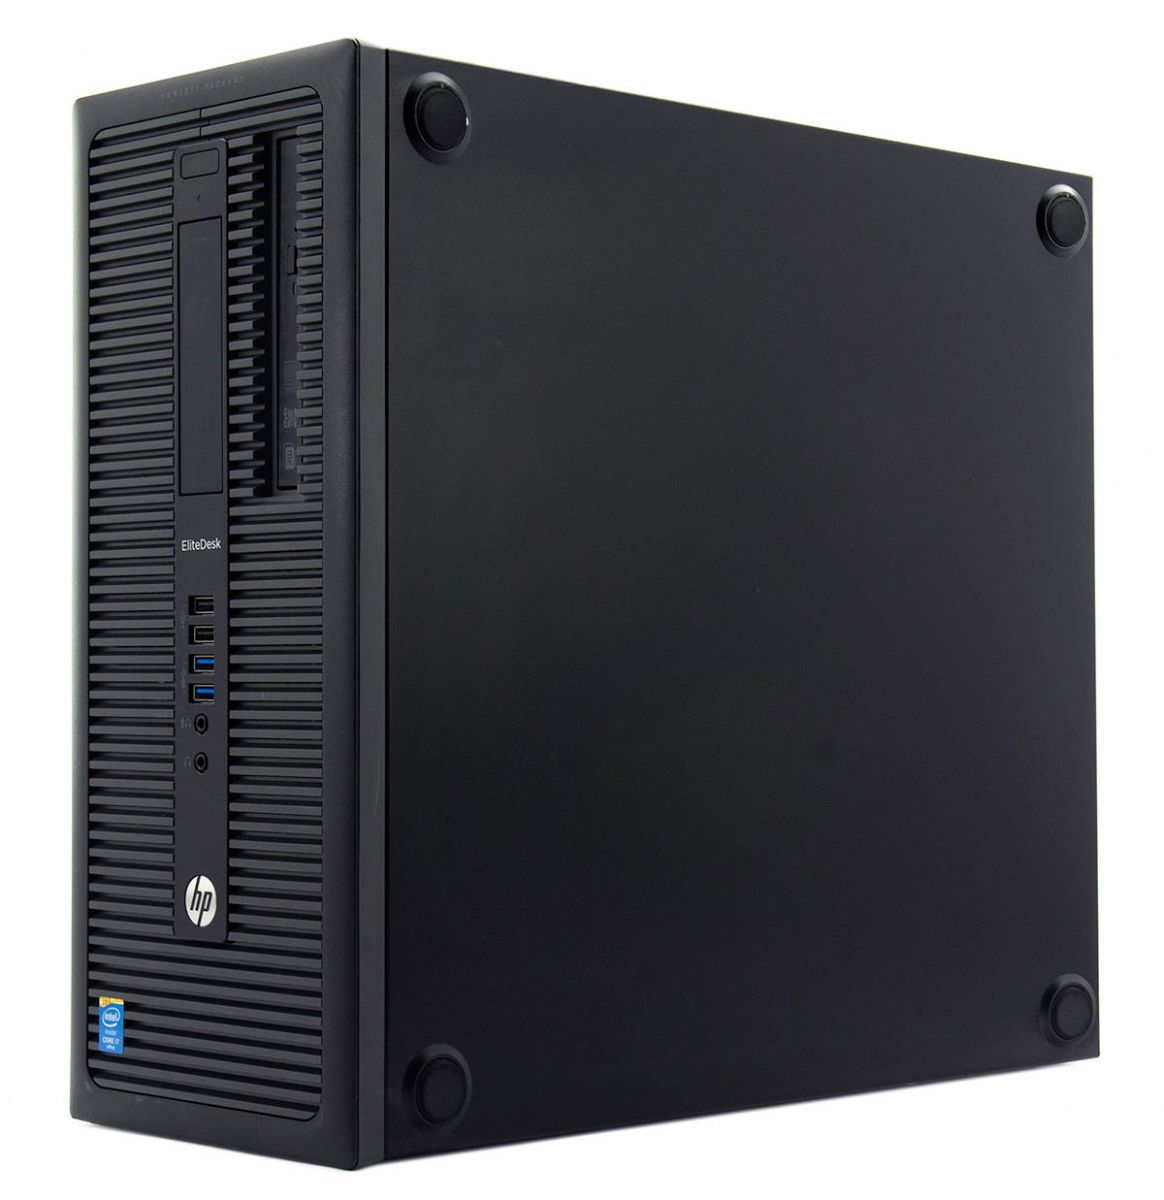 HP EliteDesk 800 G1 Tower Computer i5-4590 - Windows 10 -